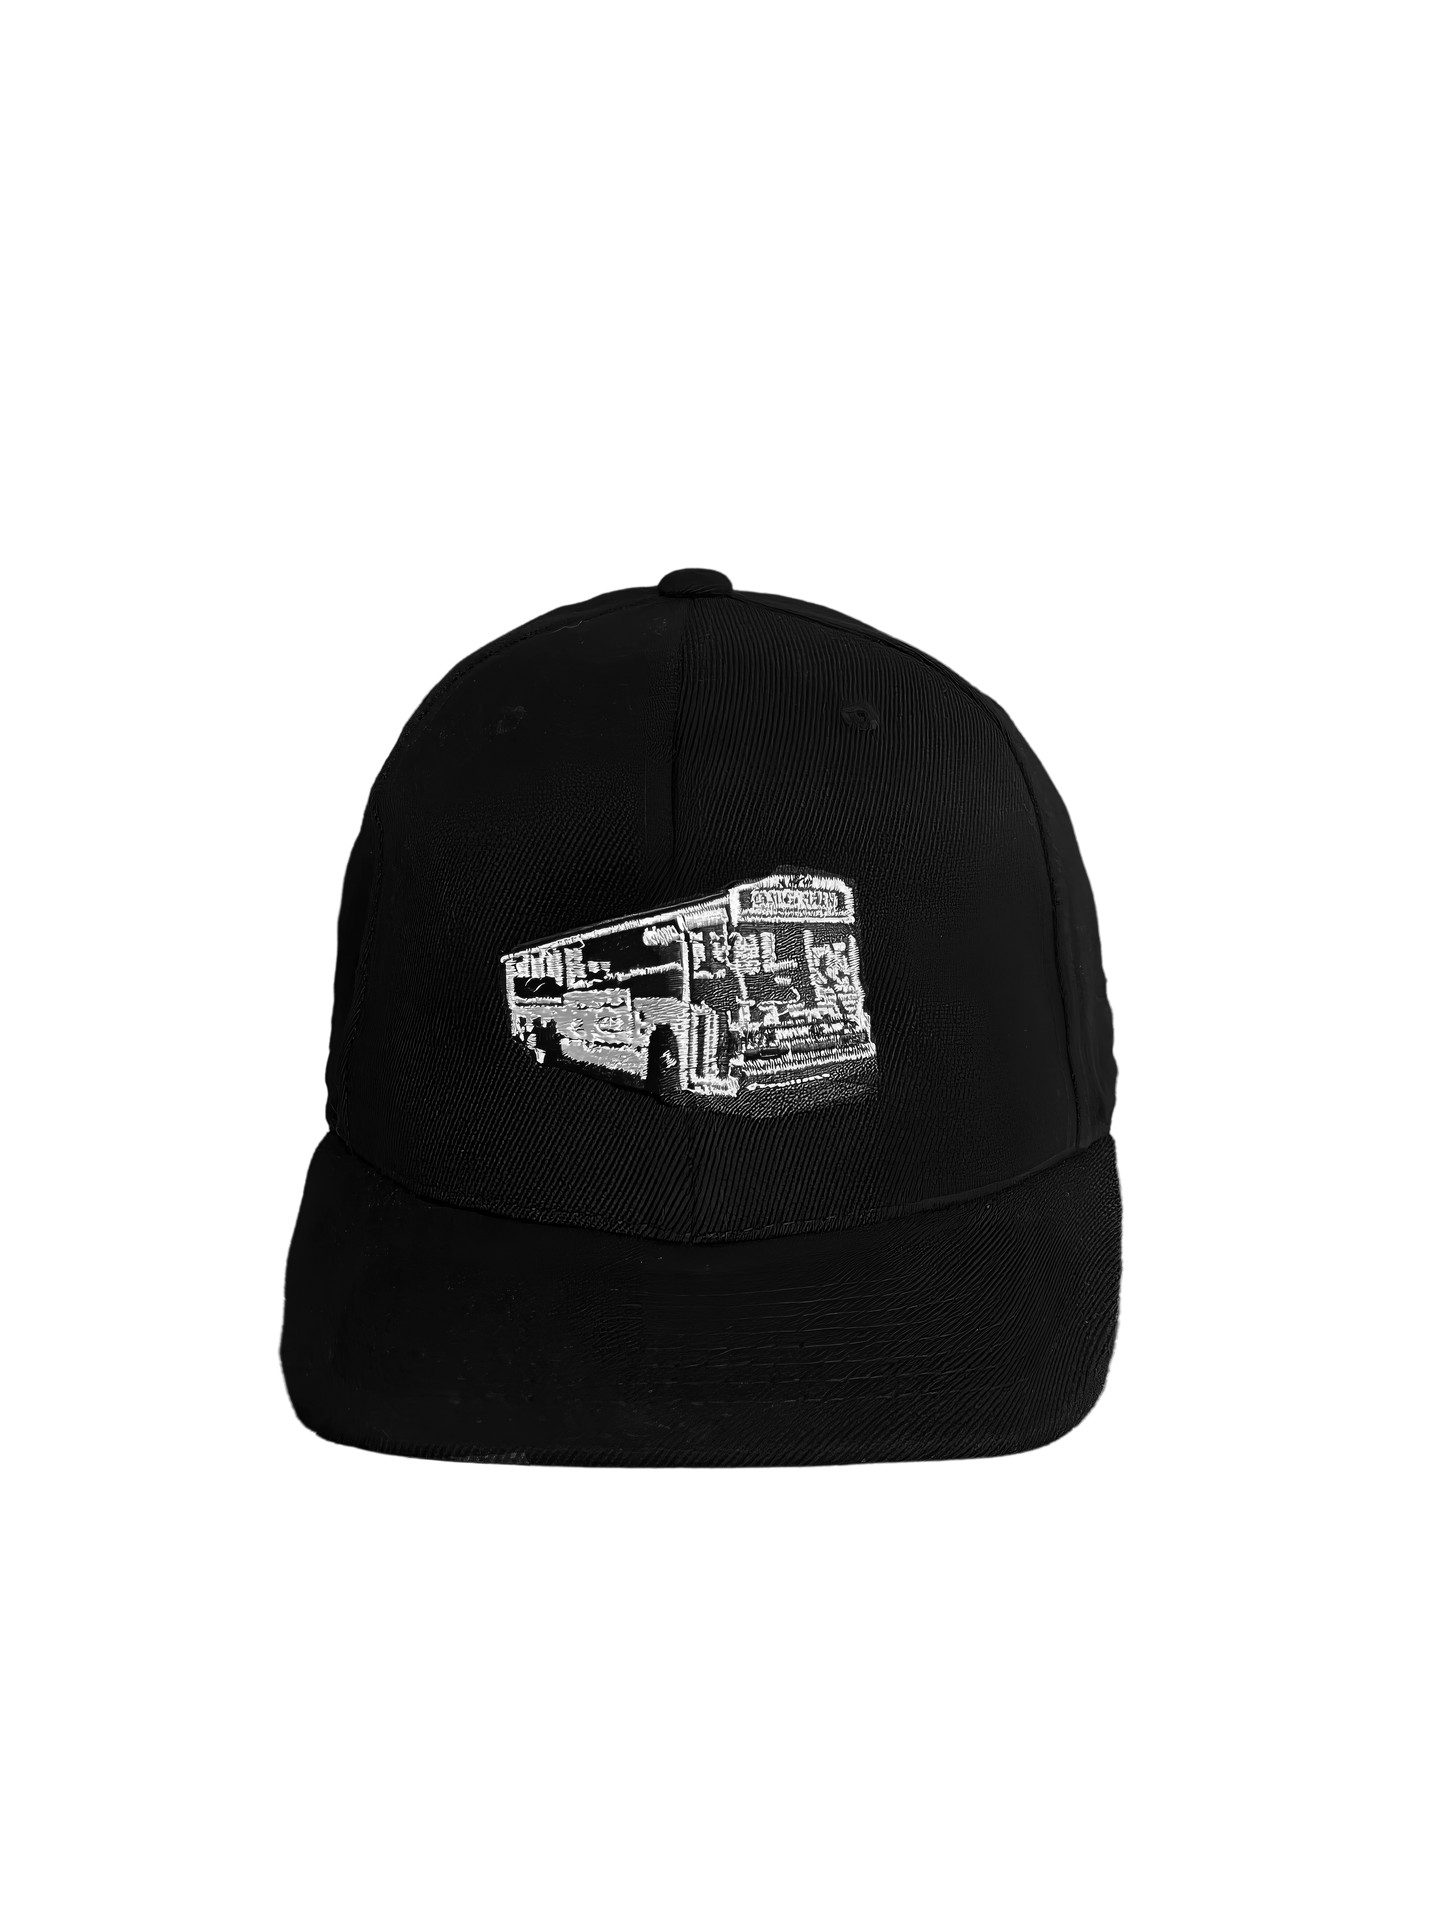 Vel Printed Black Hat